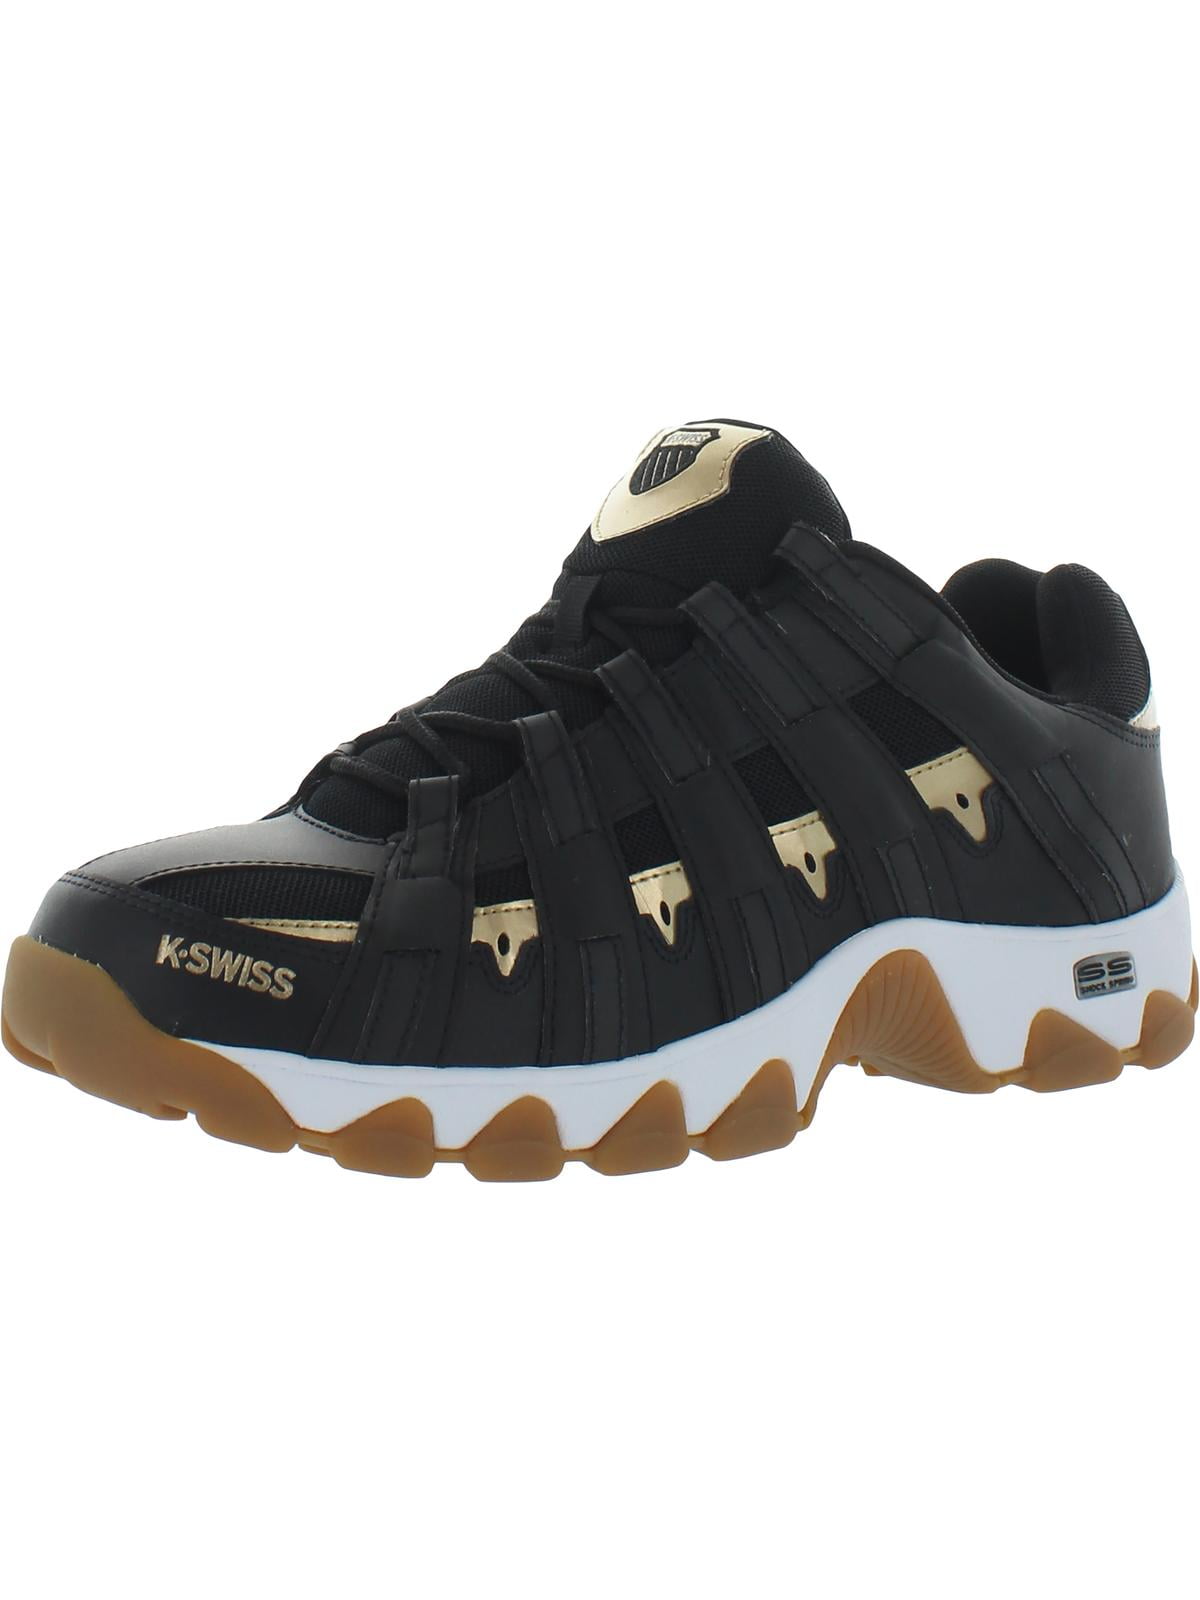 Men's St429 Black/Gold Top Sneaker - 11M -